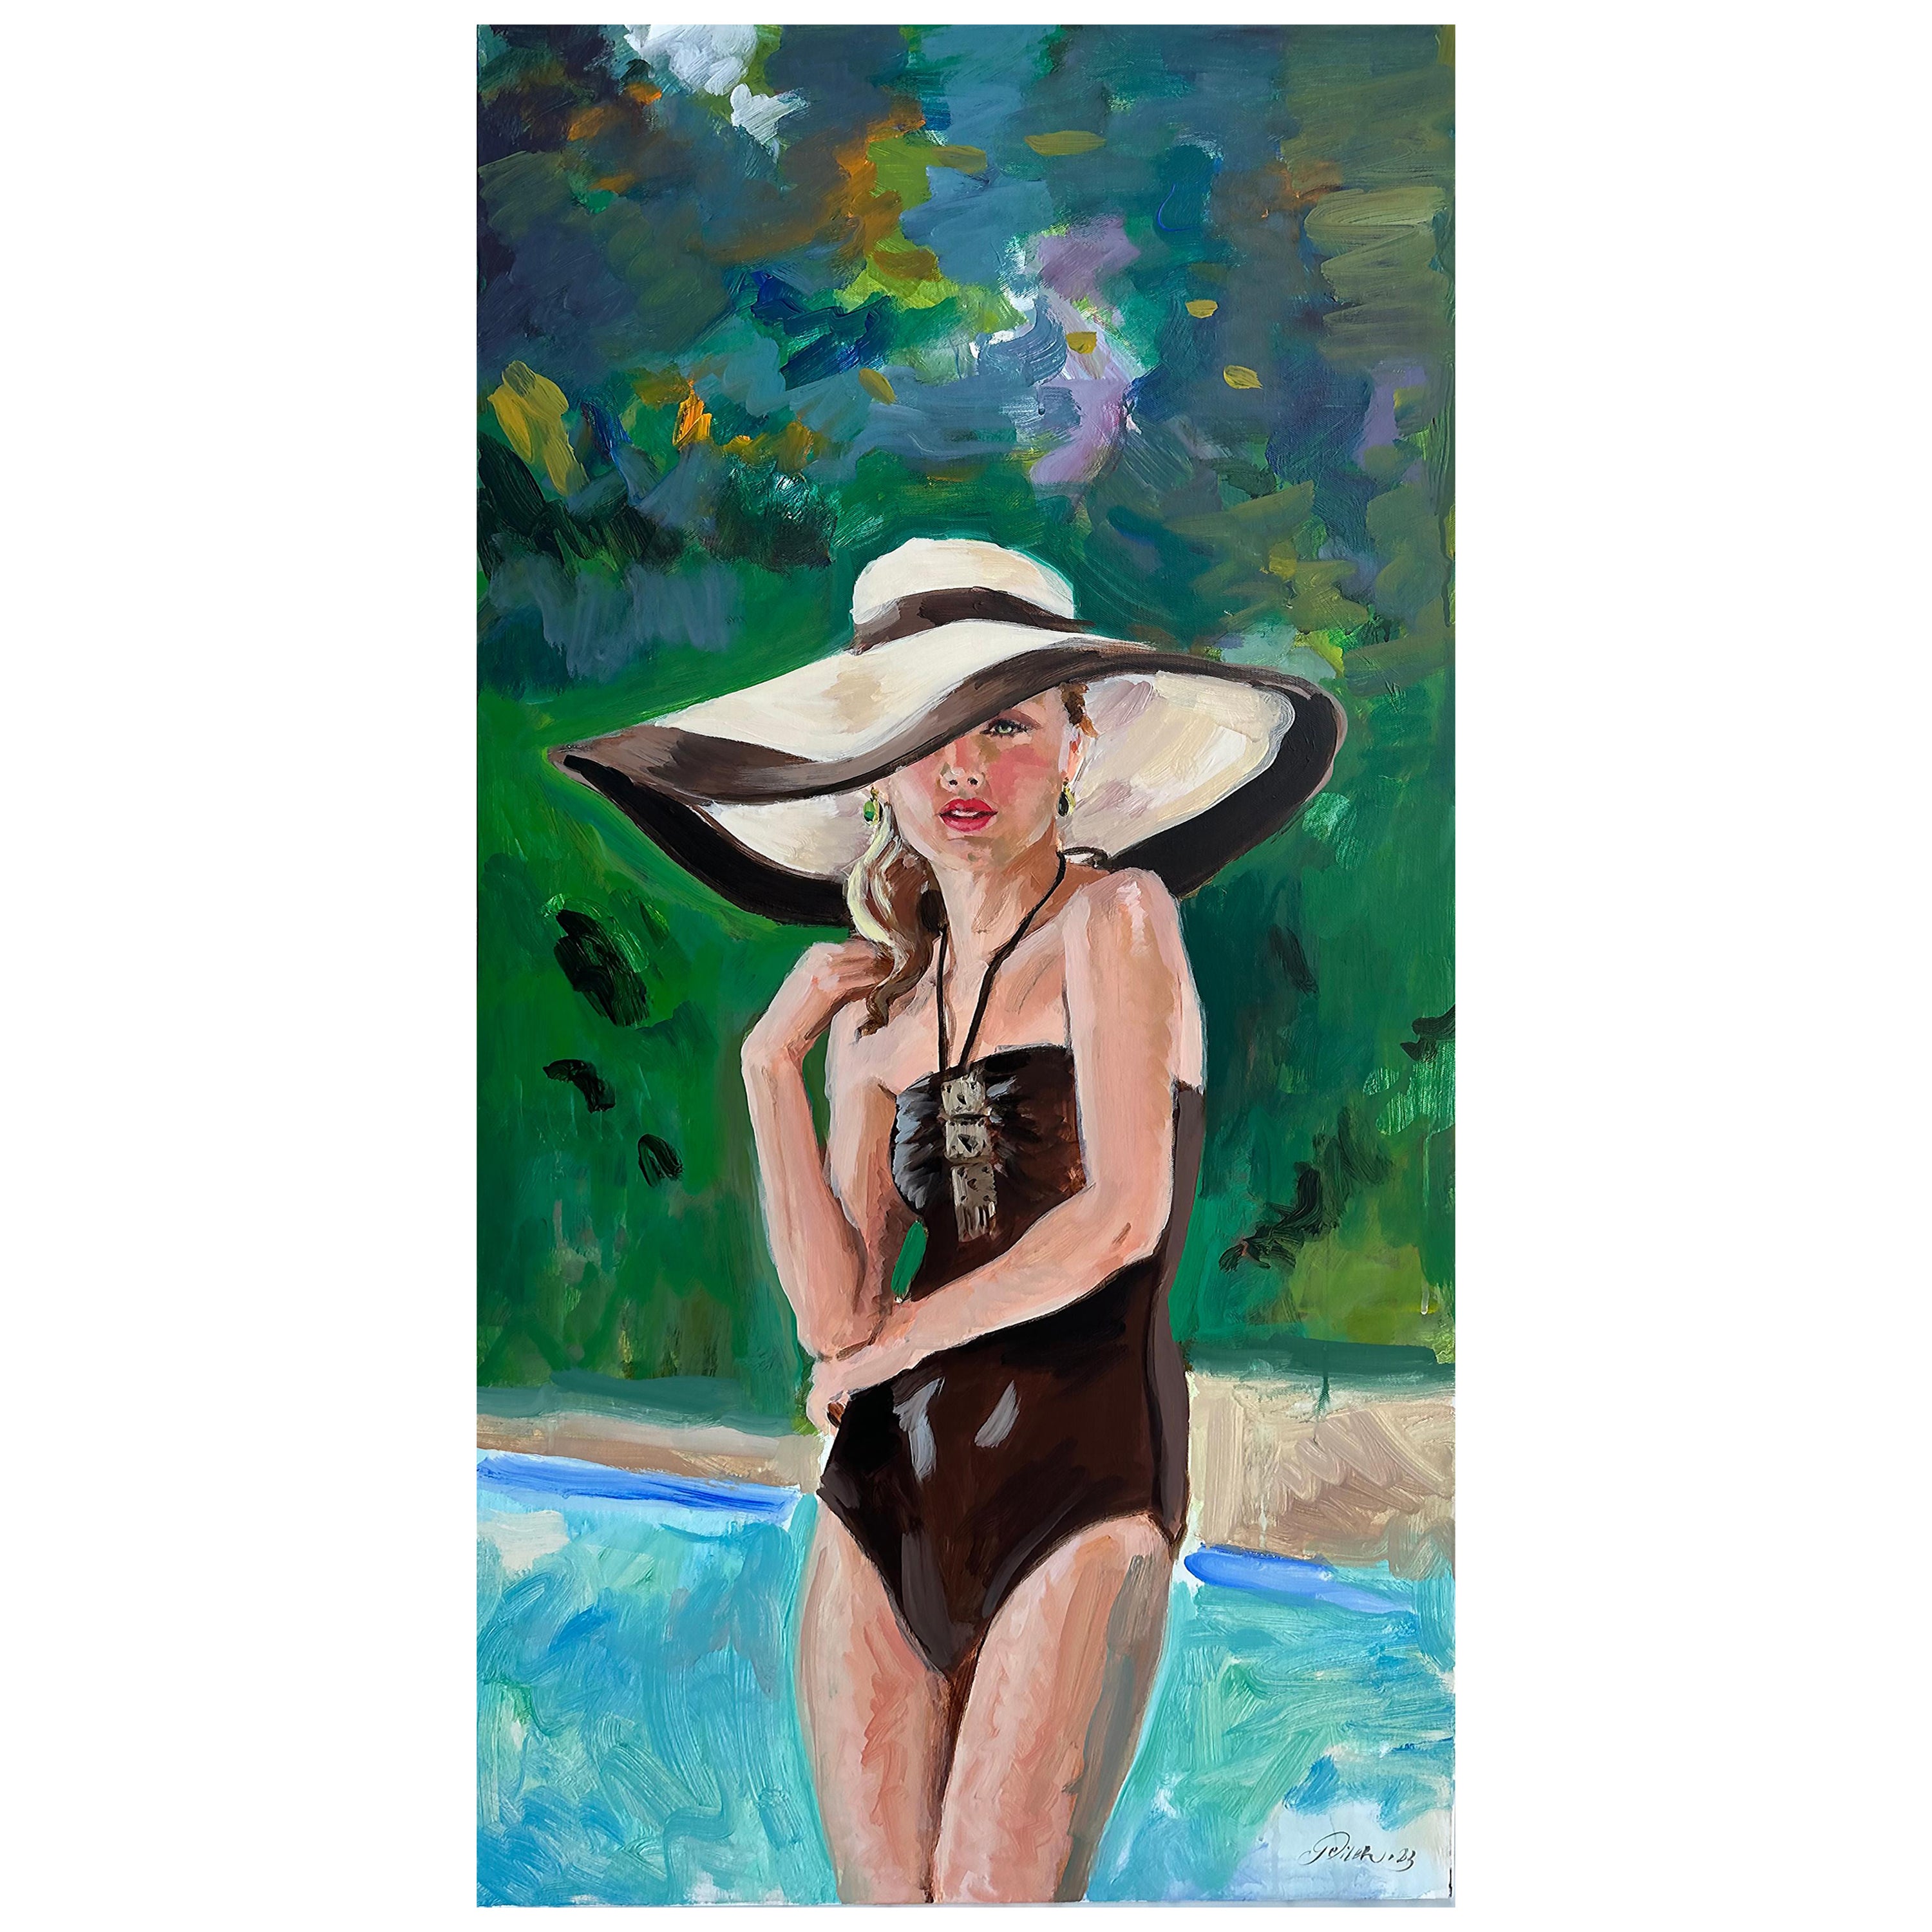 Cuban American Artist Geiler Gonzalez Painting "Woman with Hat"